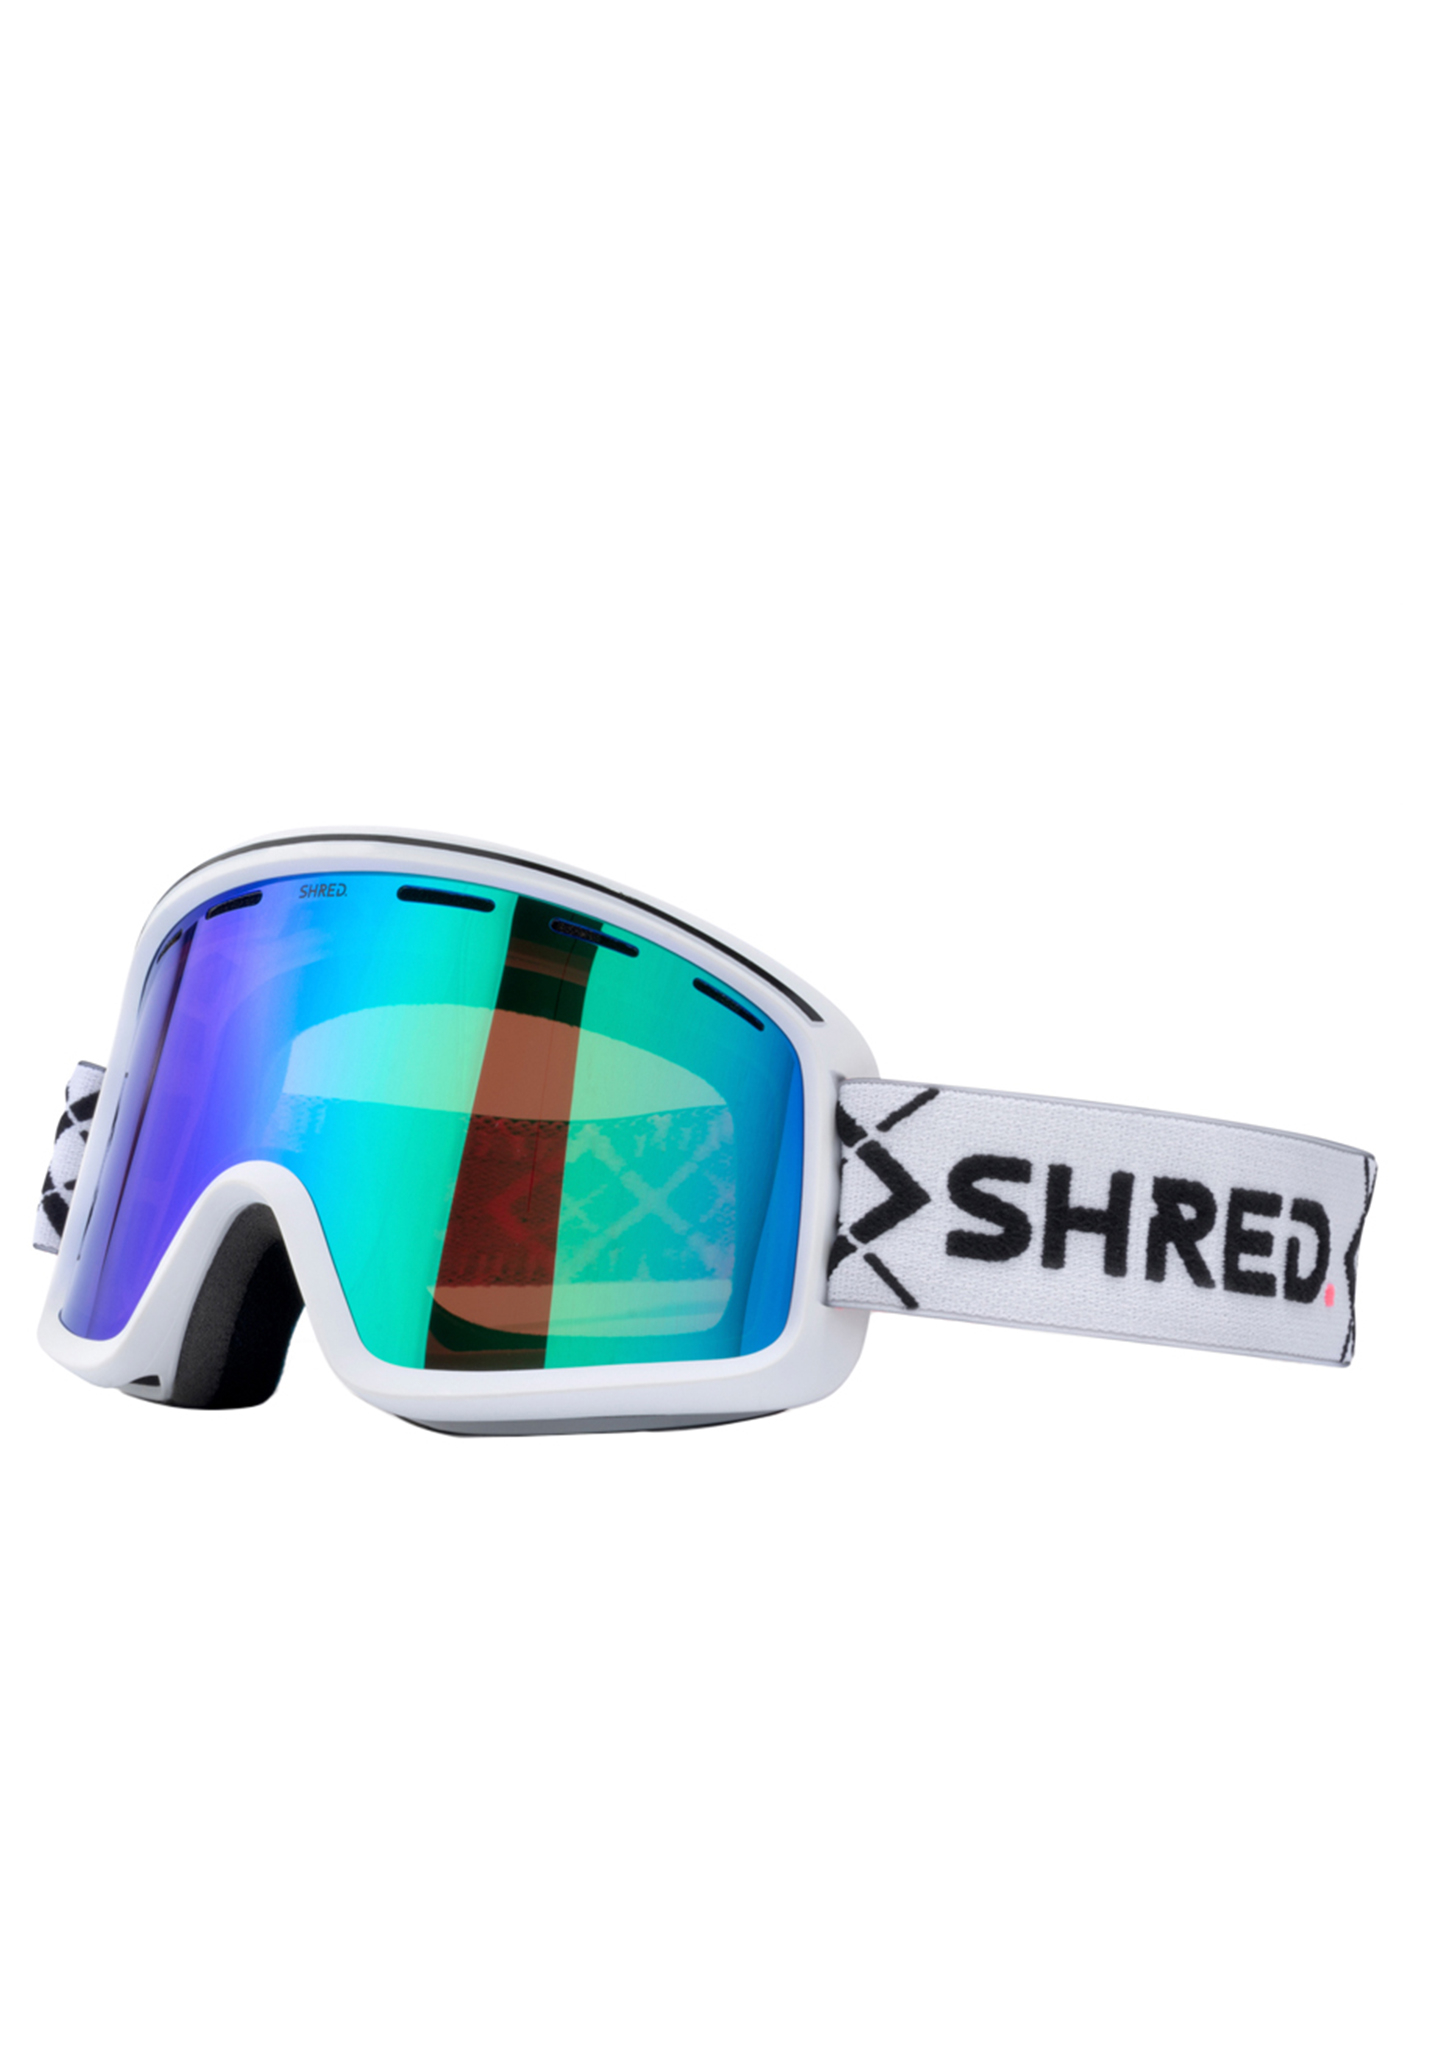 Shred Monocle Snowboardbrillen bigshow weiß/cbl plasma spiegel One Size